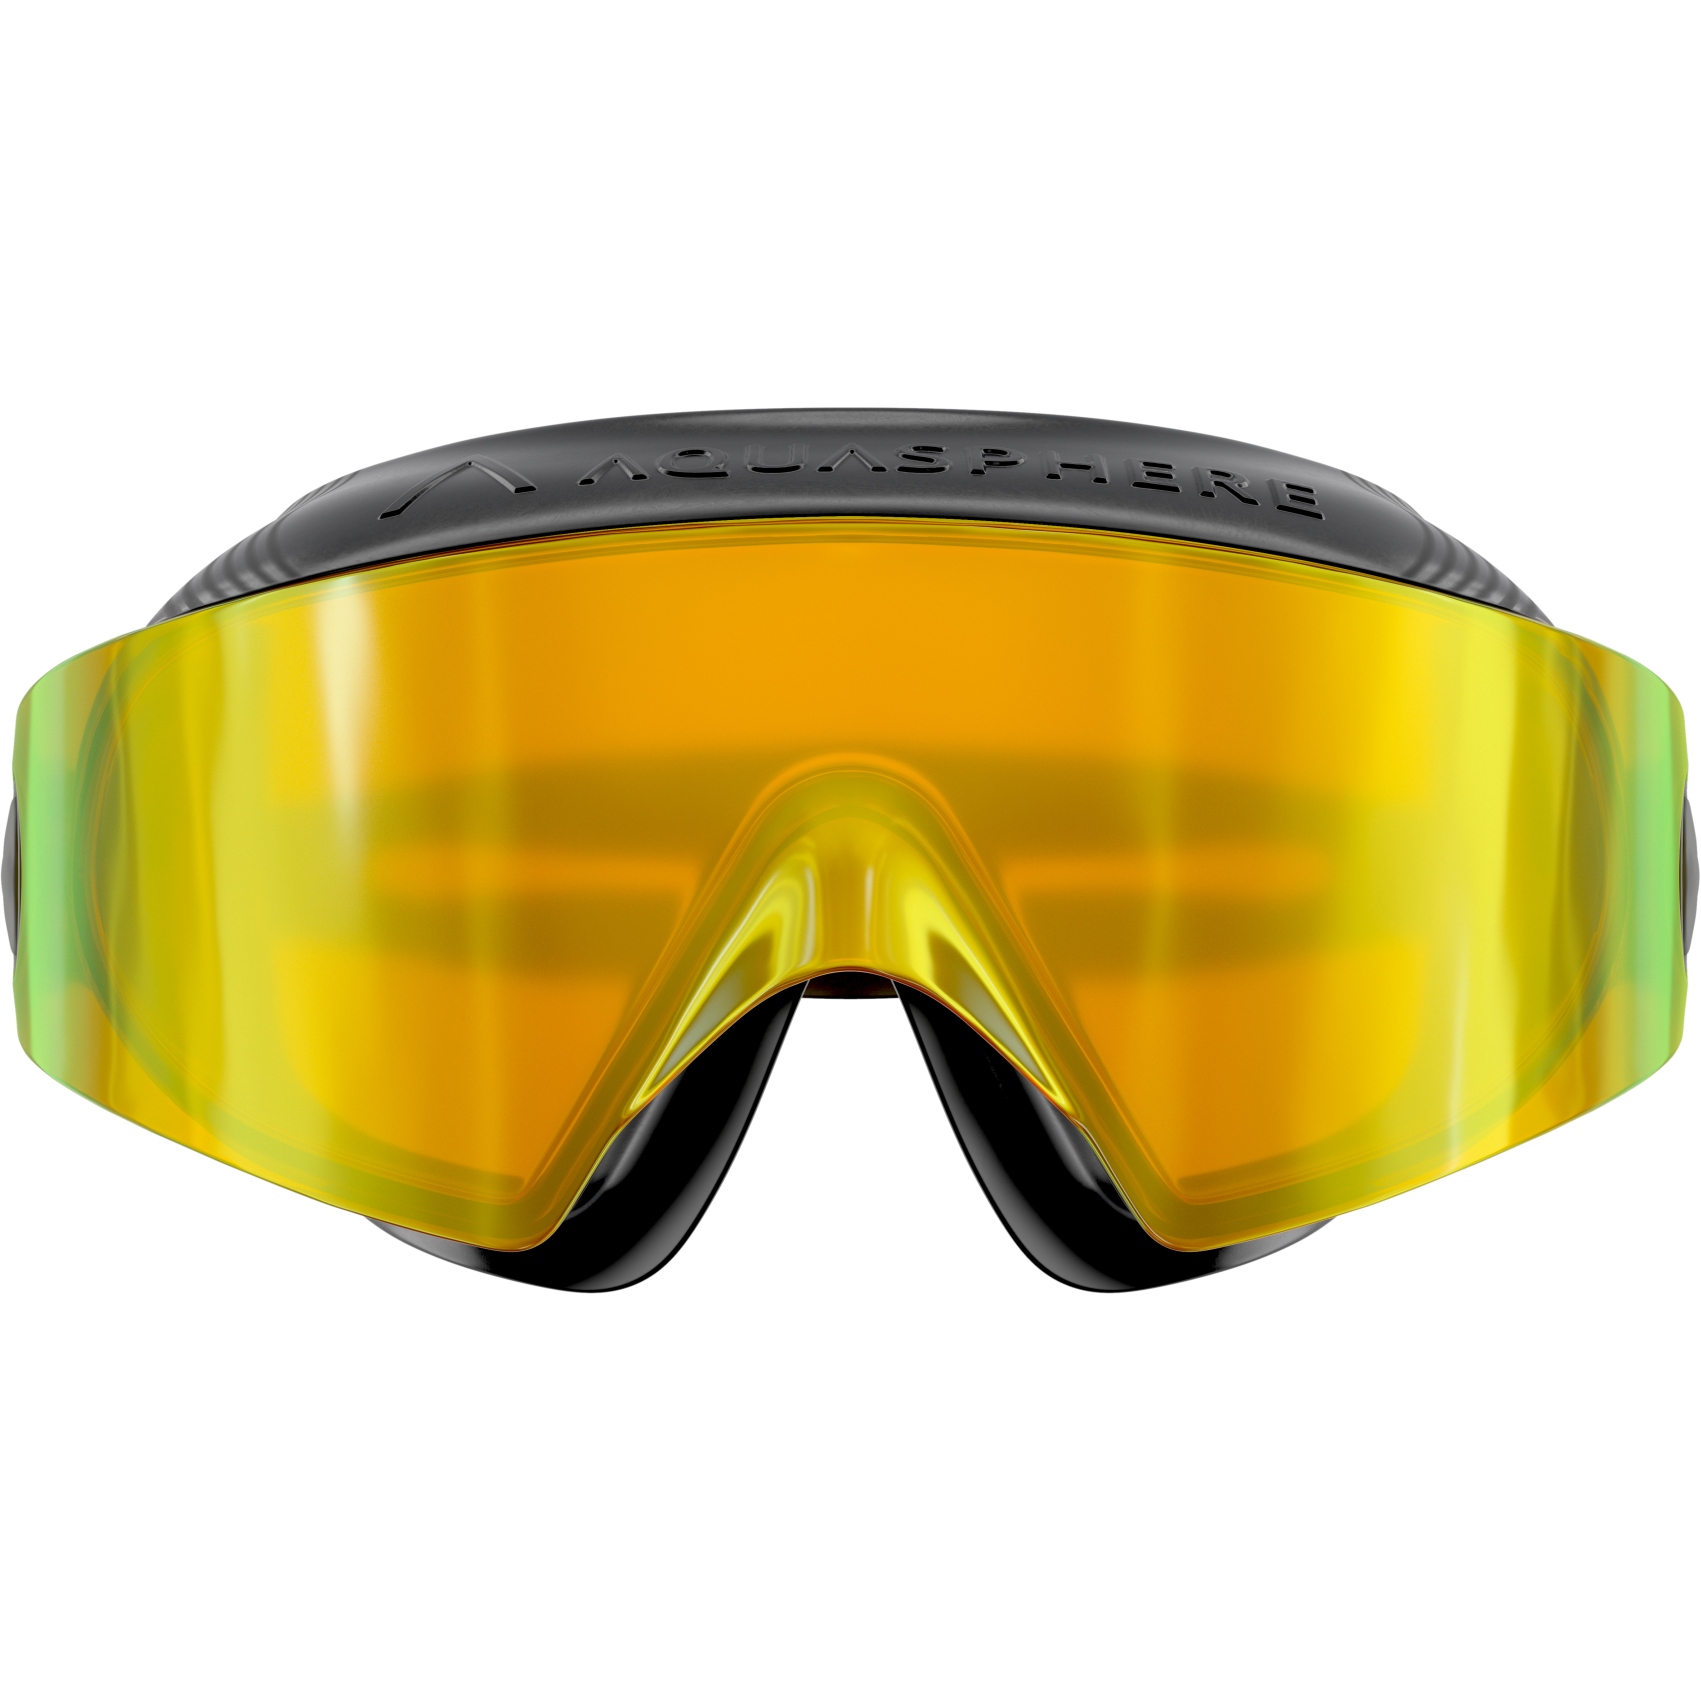 Picture of AQUASPHERE Defy Ultra Swim Goggles - Yellow Titanium Mirrored - Black/Bright Yellow